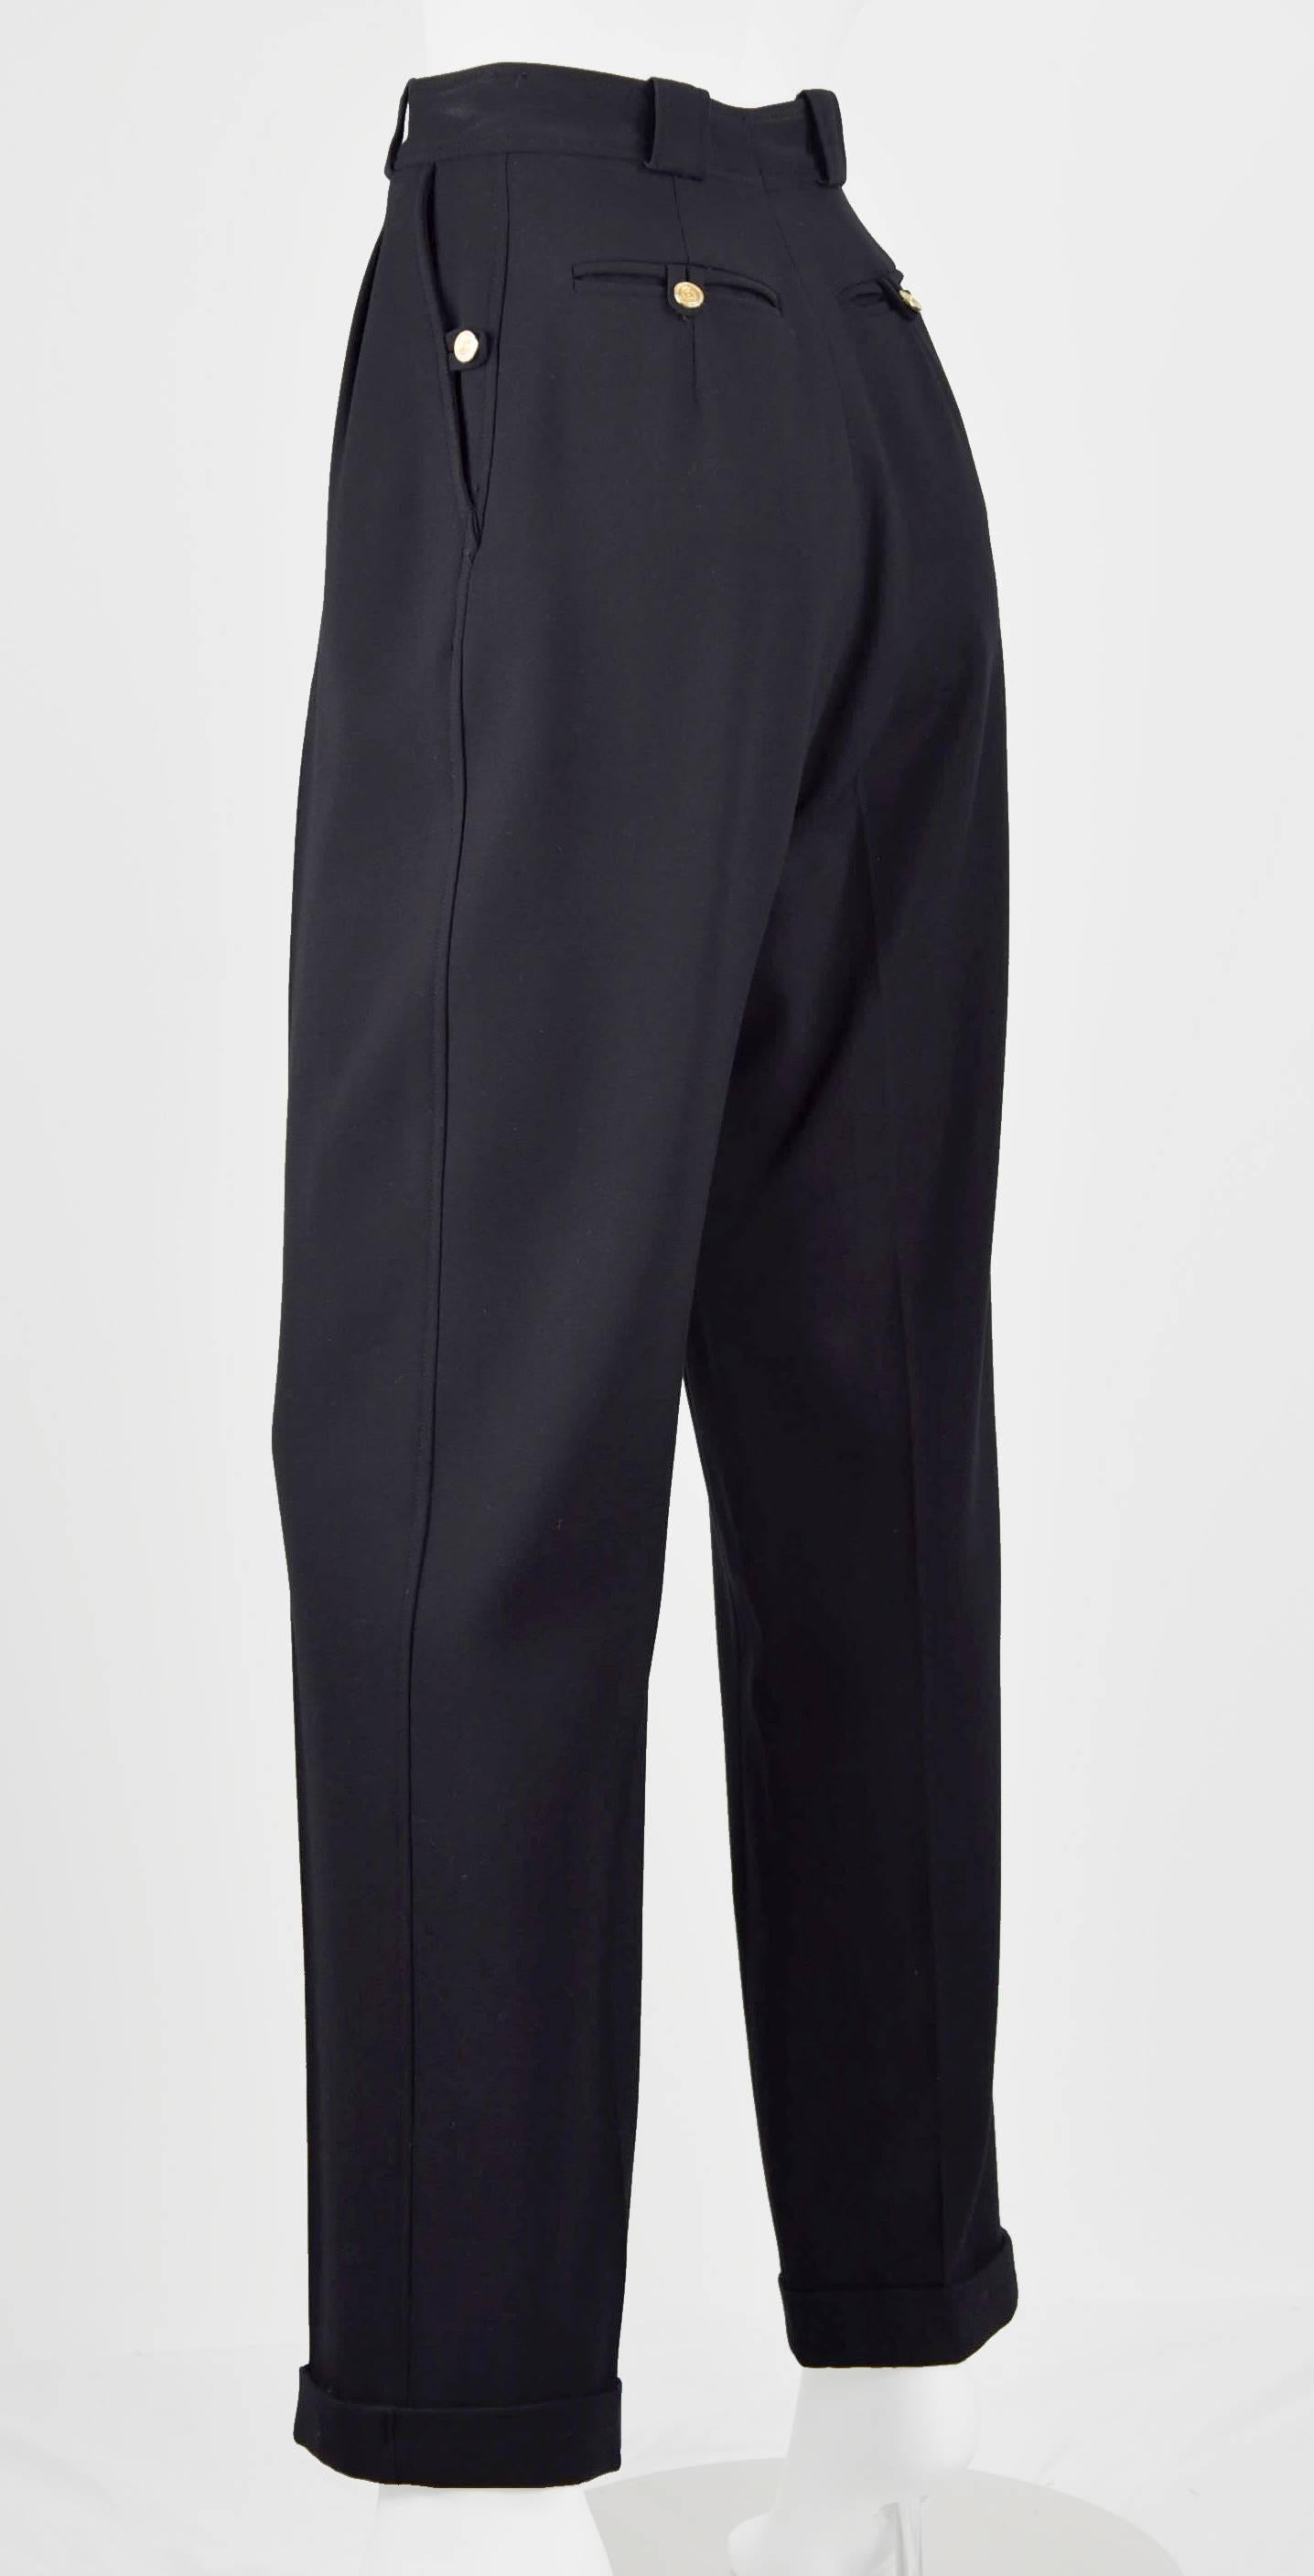 Women's 1980's Boutique Black Wool Pants With Cuffs & Famous HistoricChanel Buttons FR 4 For Sale